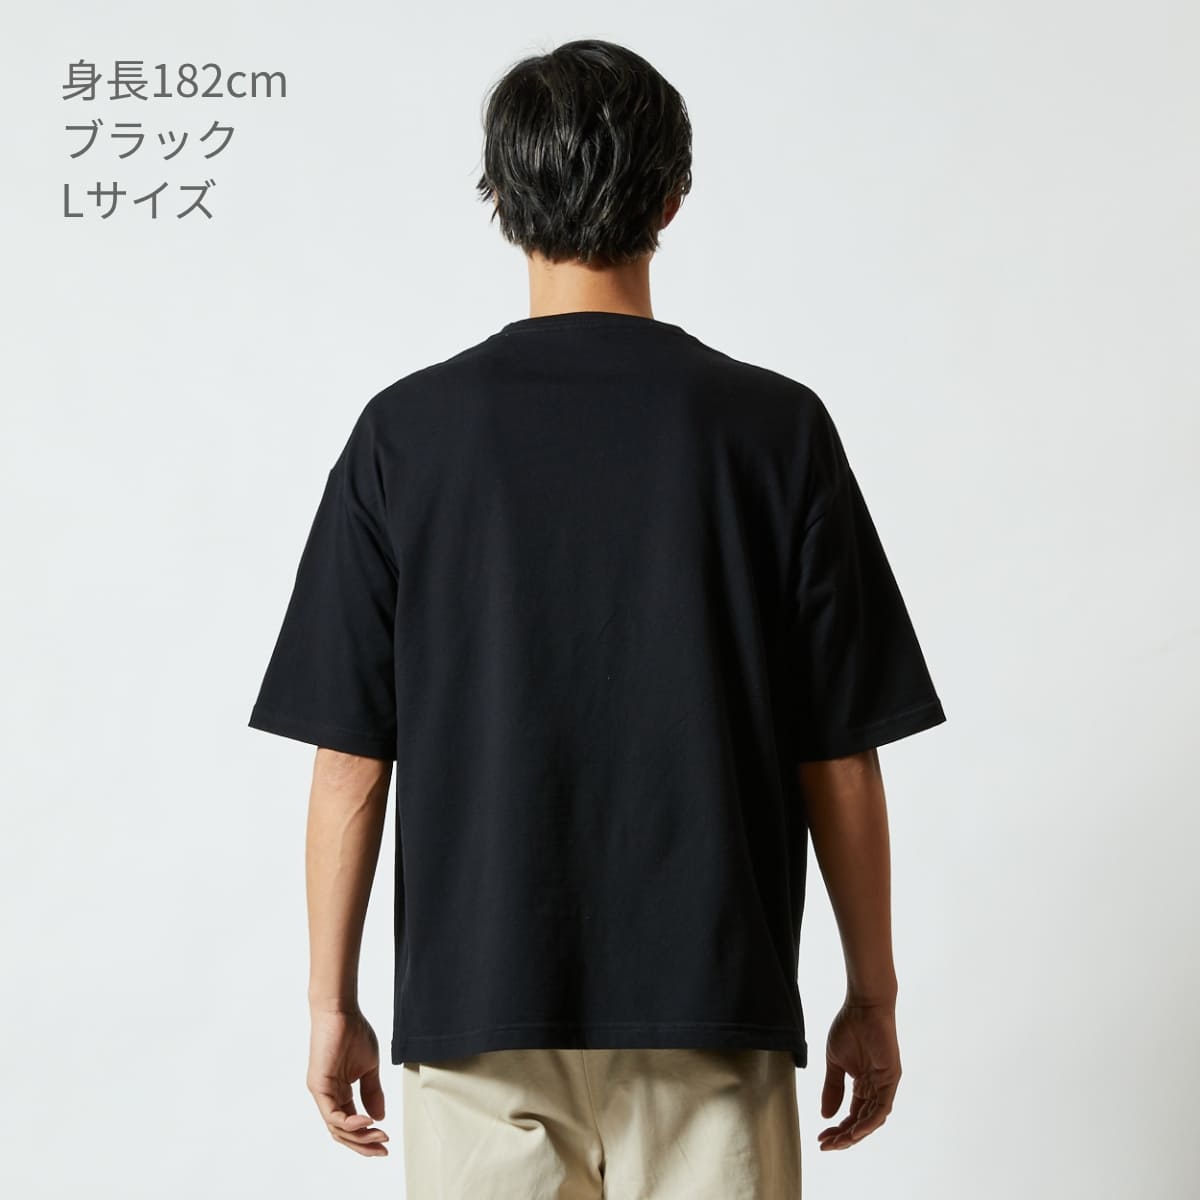 TOKYO WASH CLUB] Tシャツ ブラック LサイズBLACKSIZE - Tシャツ 